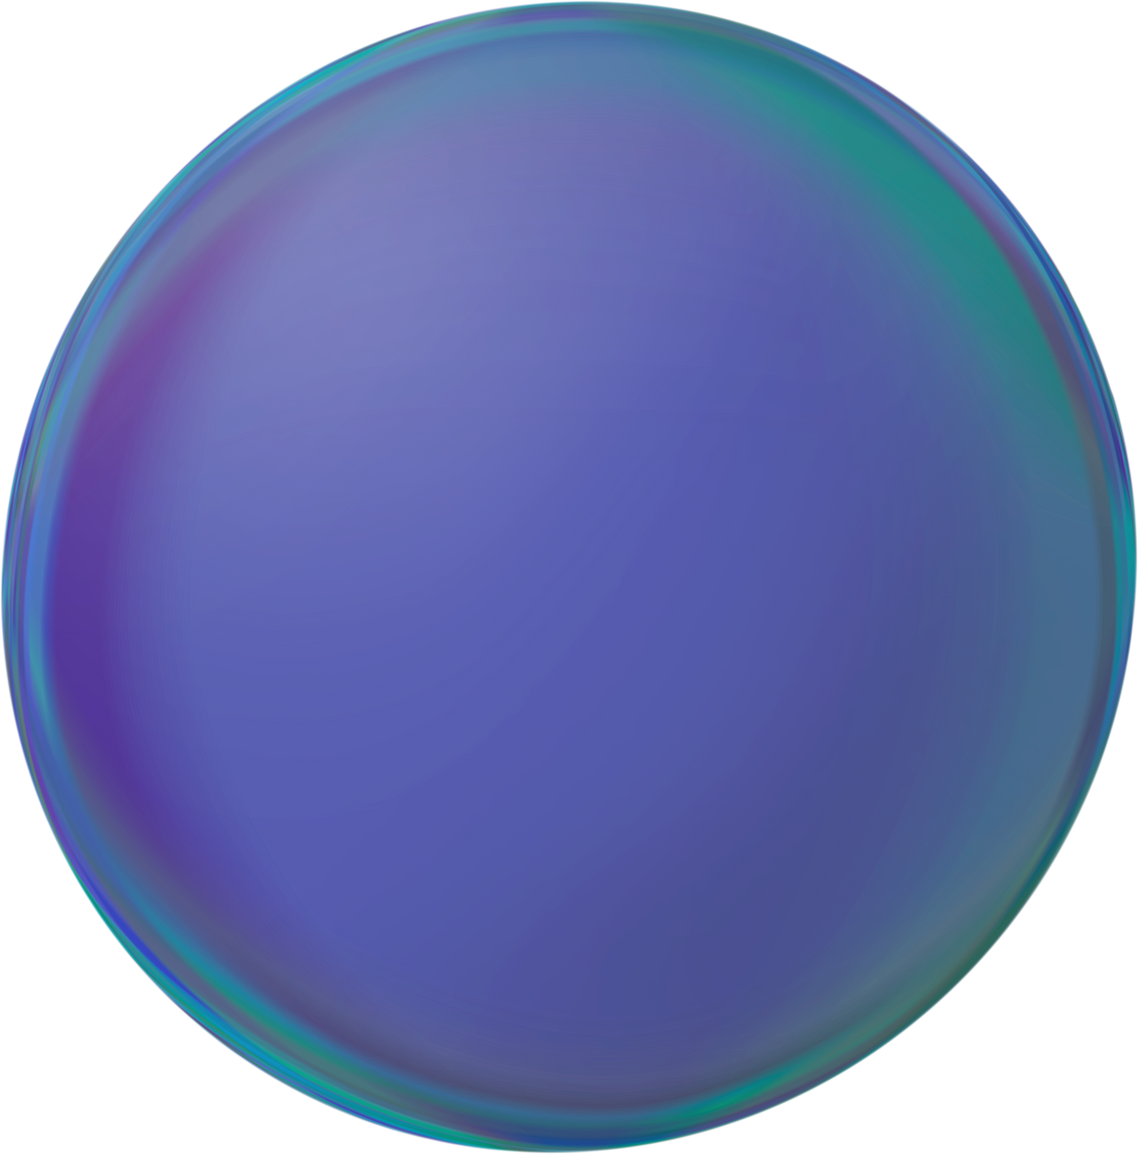 Colorful soap bubbles with rainbow reflection. Single soap bubble.